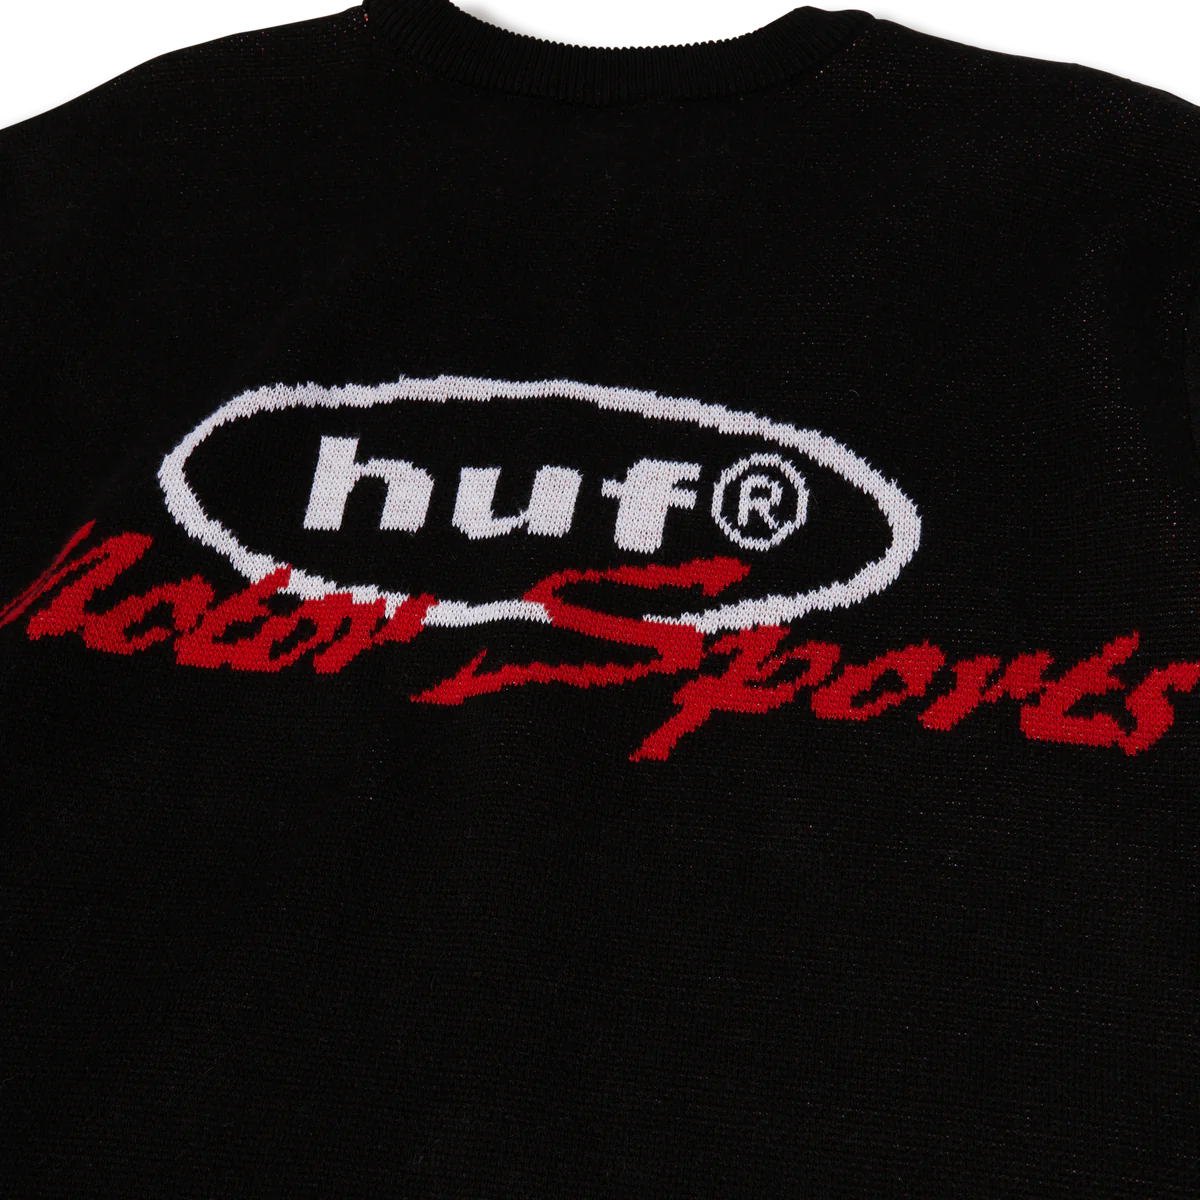 HUF x Toyota TRD Racing Sweater